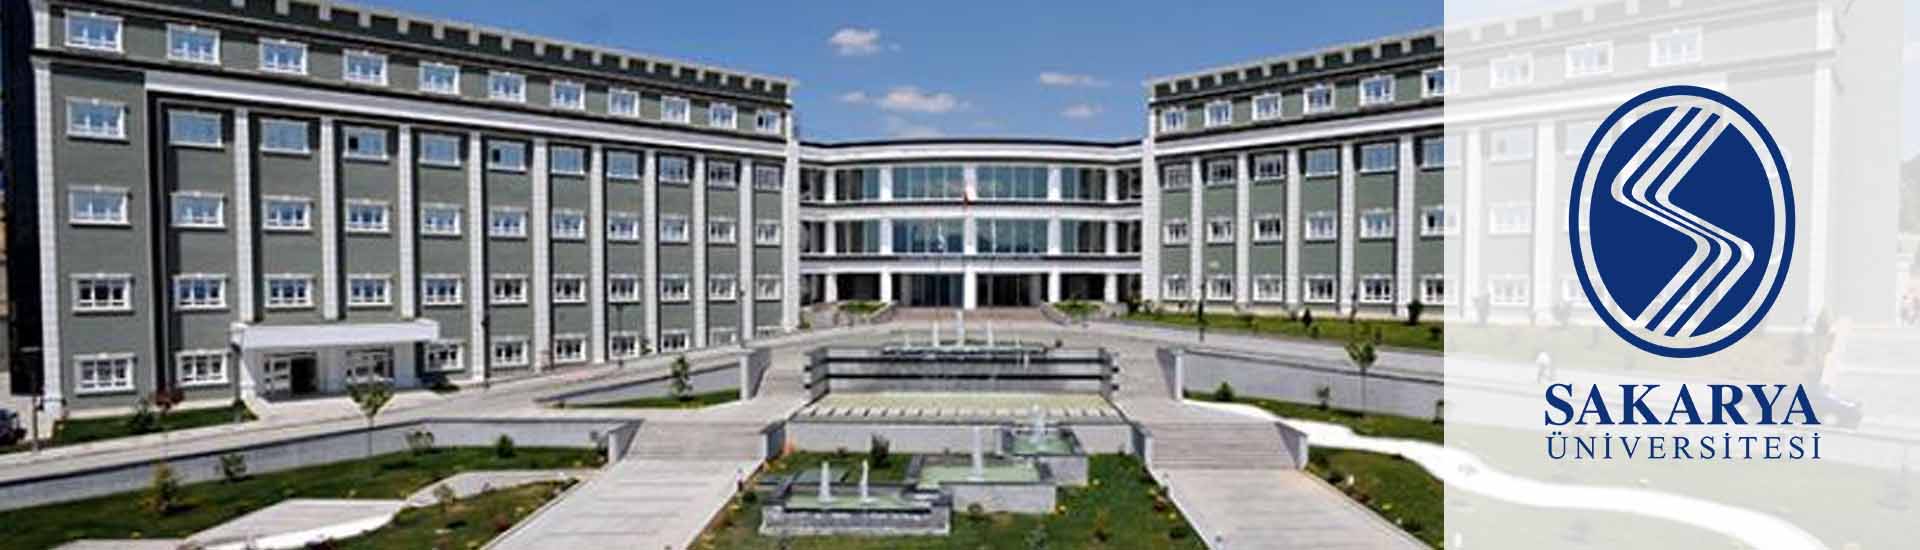 دانشگاه ساکاریا ترکیه ( Sakarya University )